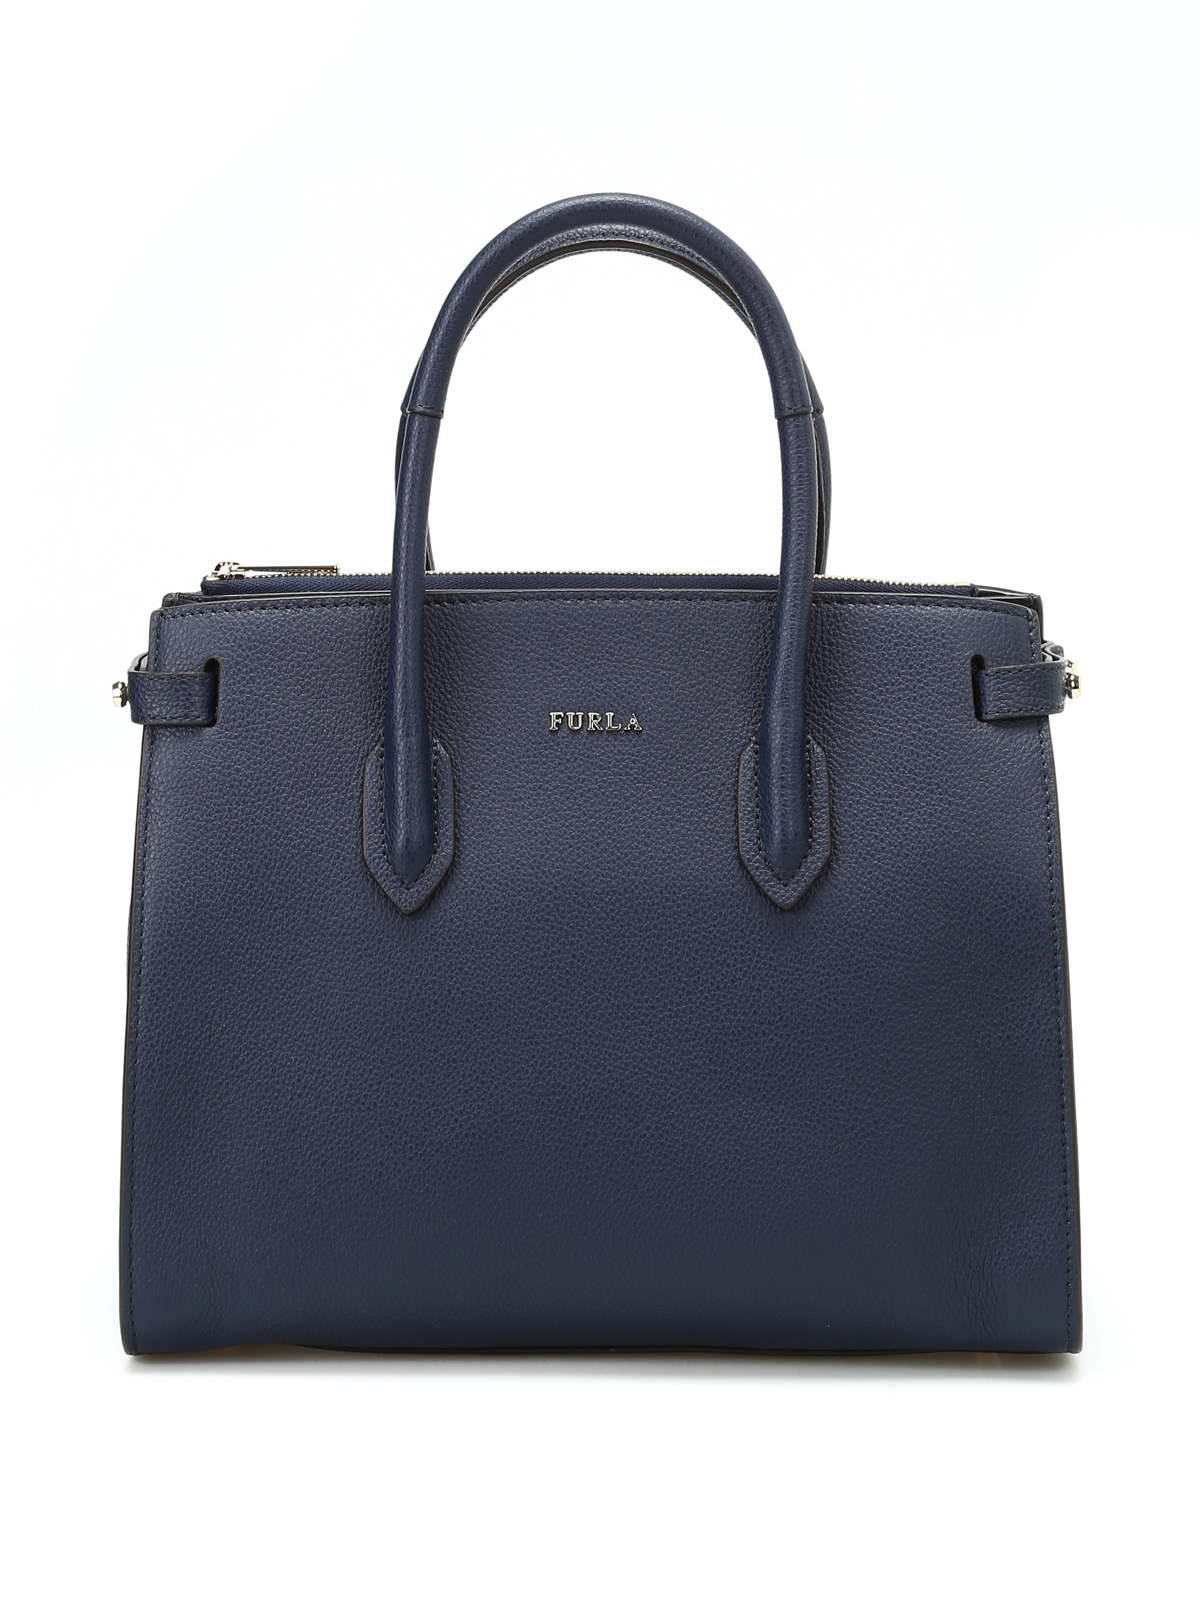 Totes bags Furla - Pin S blue grain leather tote - 924570 | iKRIX.com